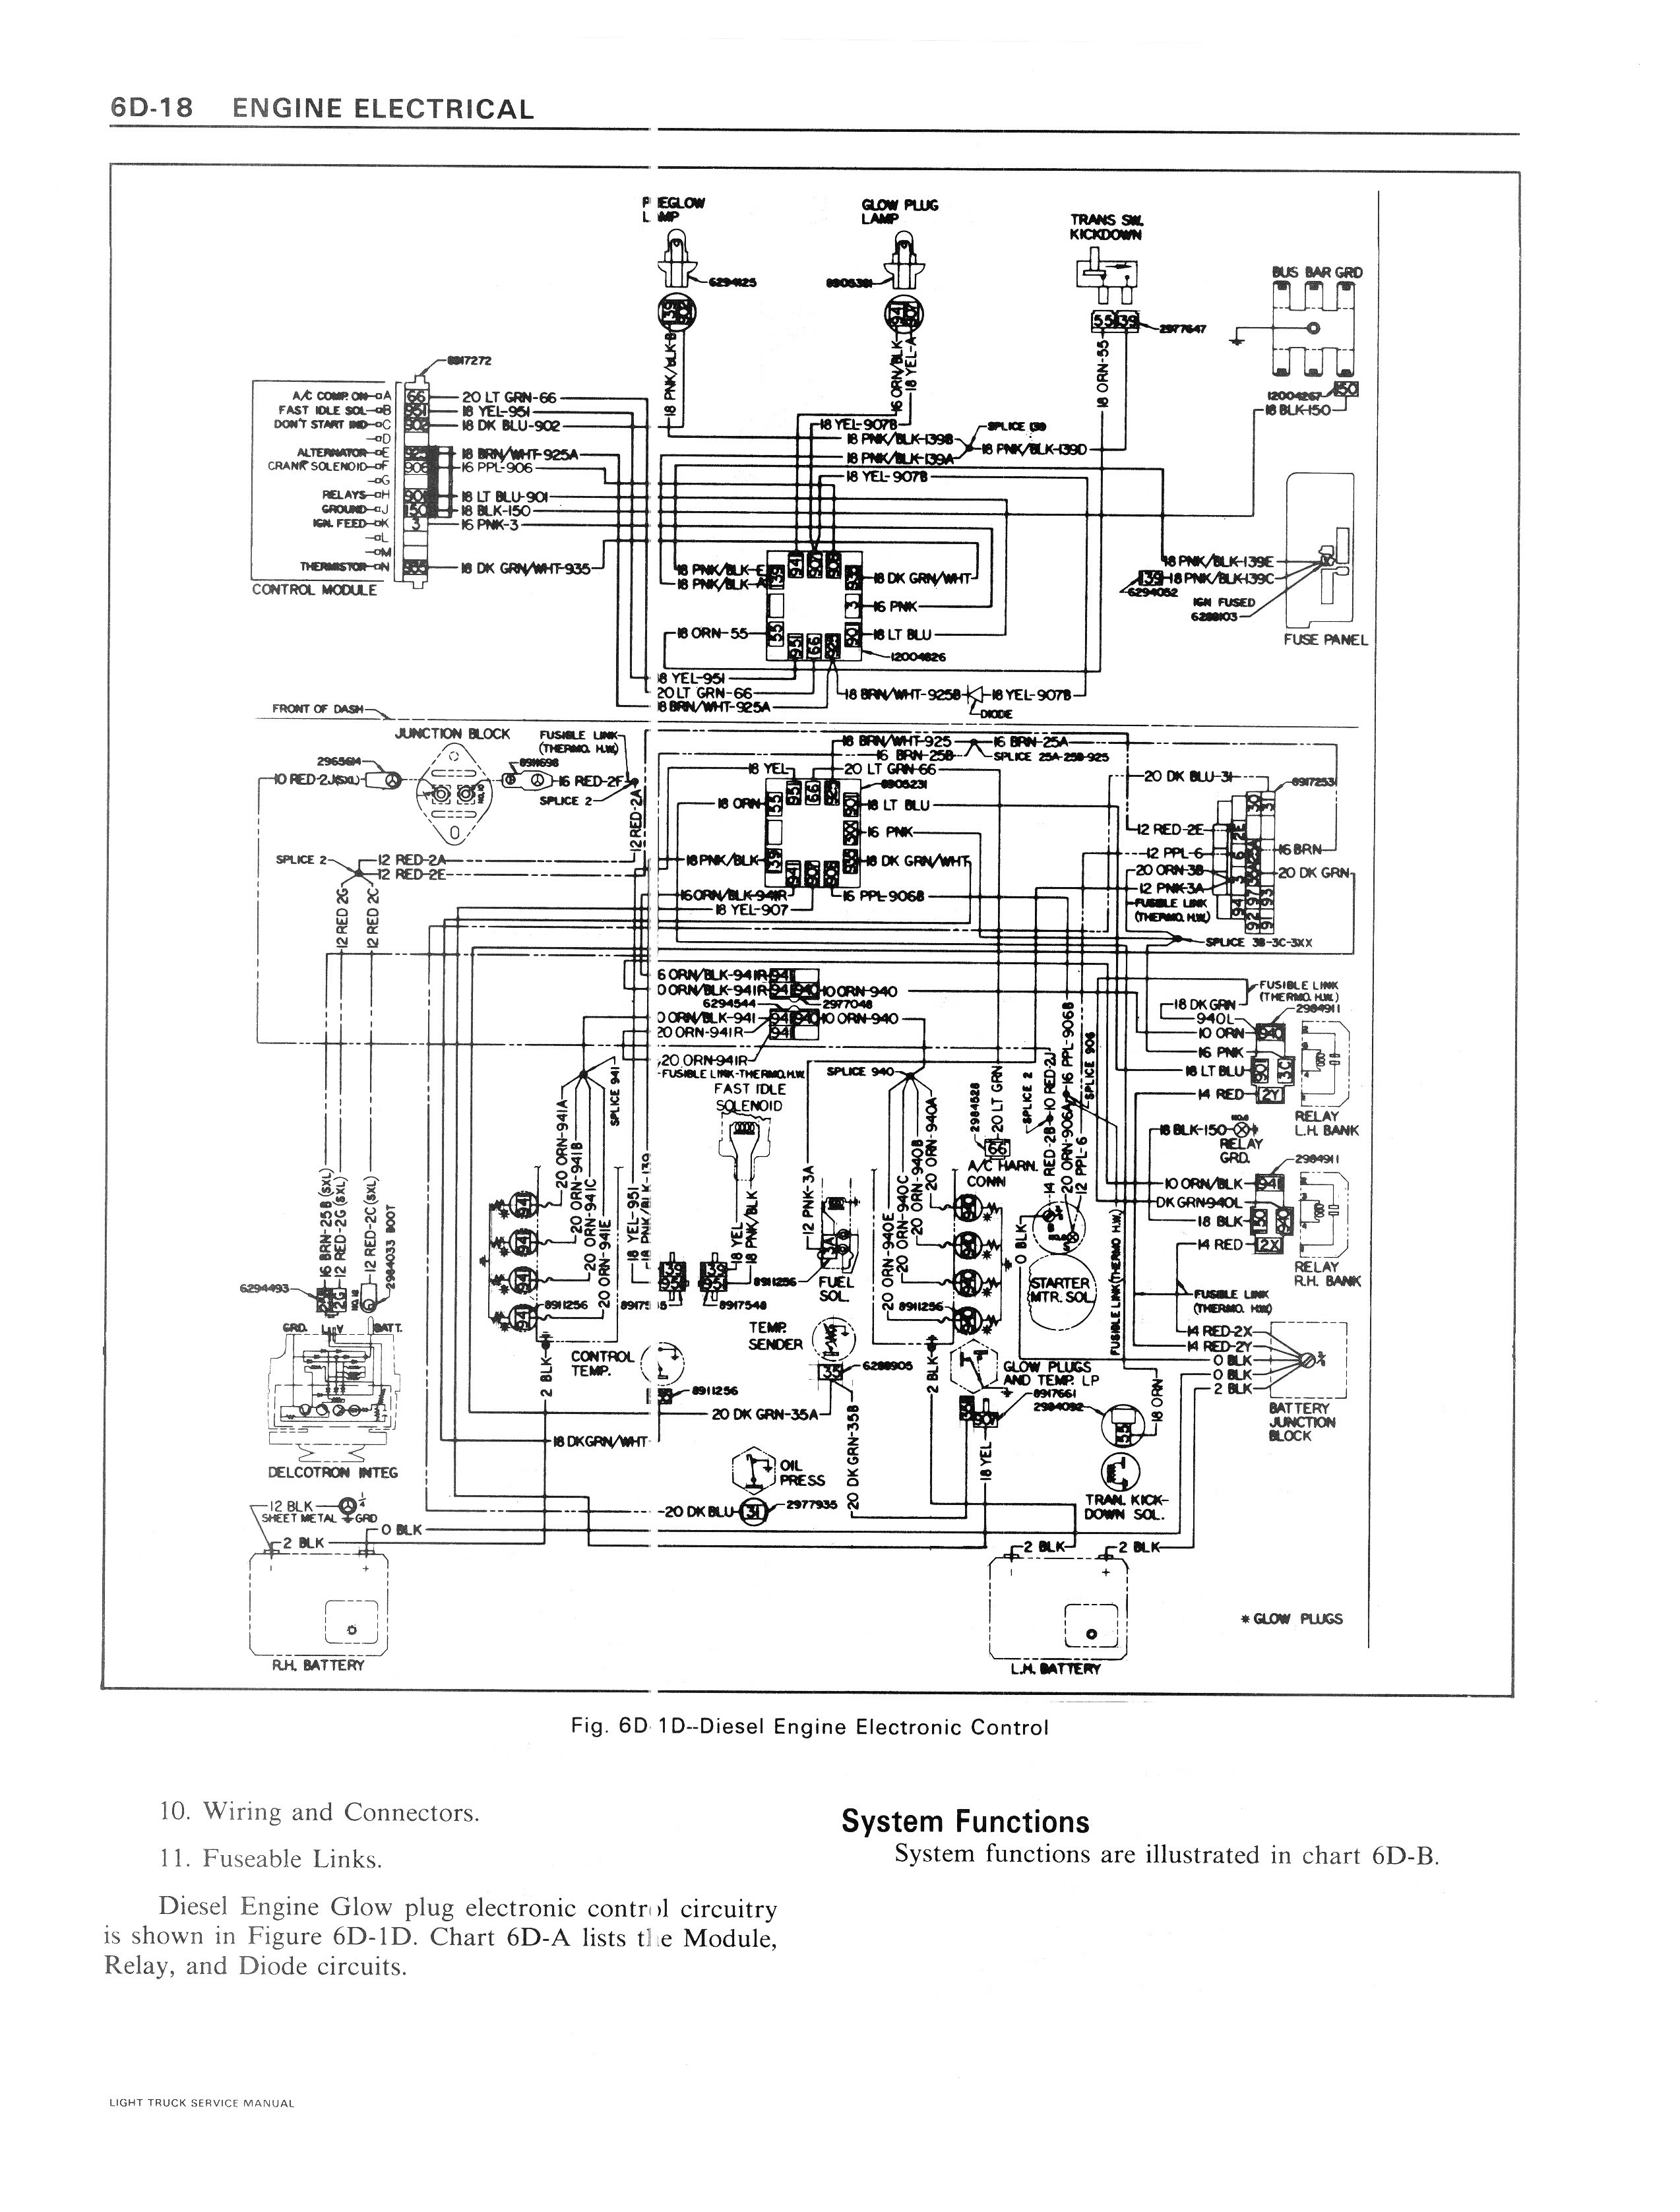 1979 GMC Series 10-35 Engine Electrical / 79GMC-rescan0140.jpg